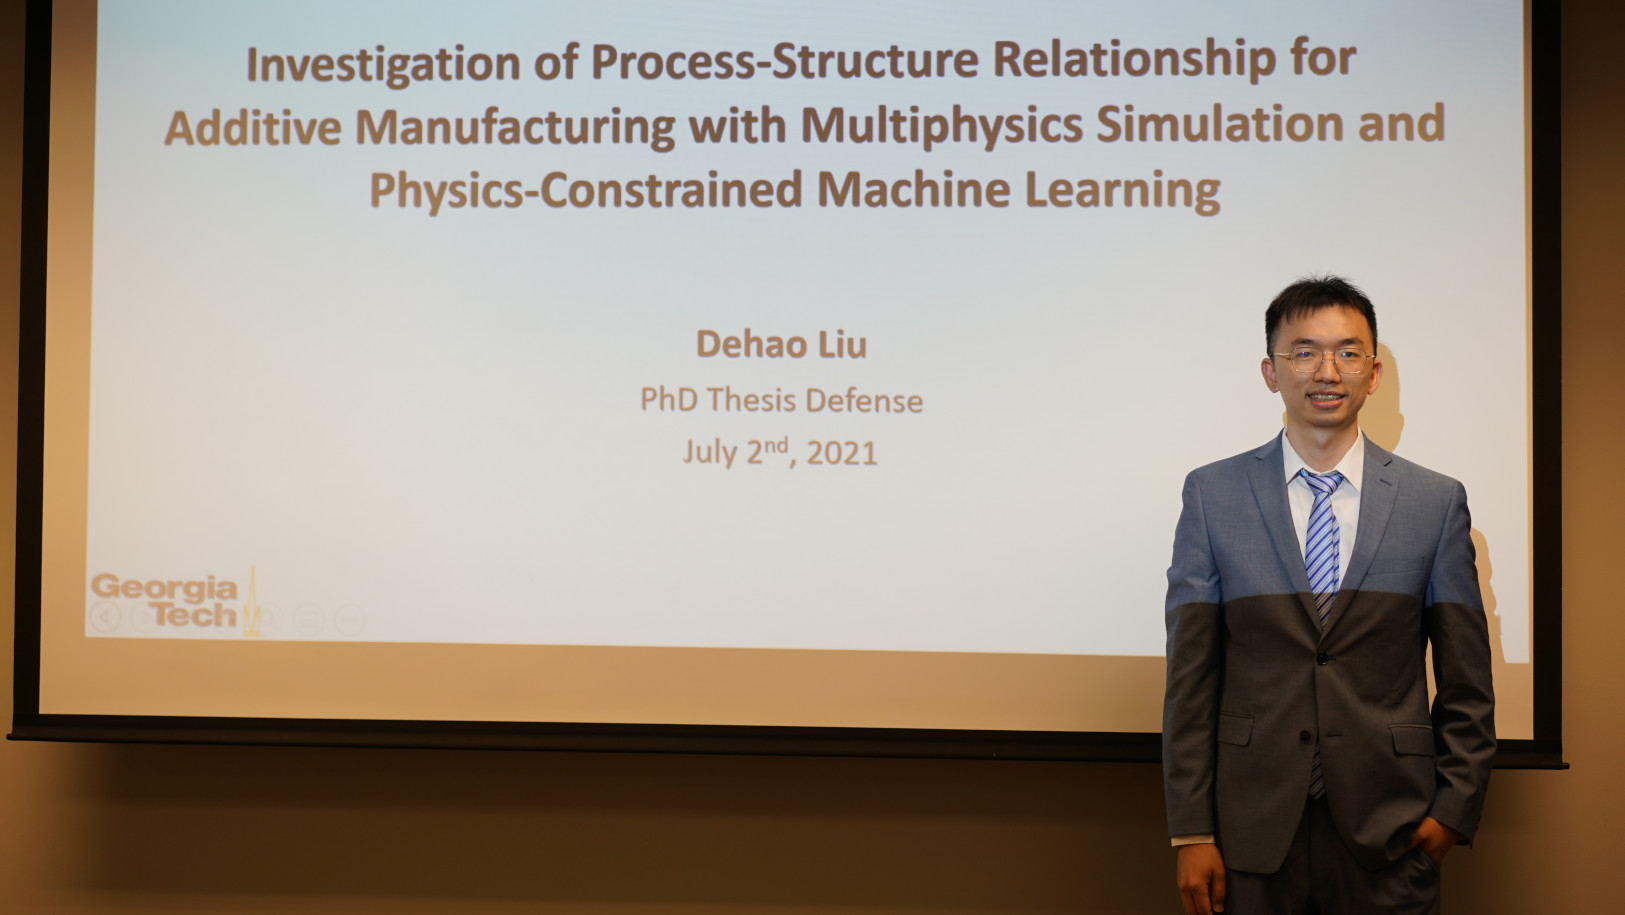 Dehao Liu defended Ph.D. dissertation (July 2, 2021)